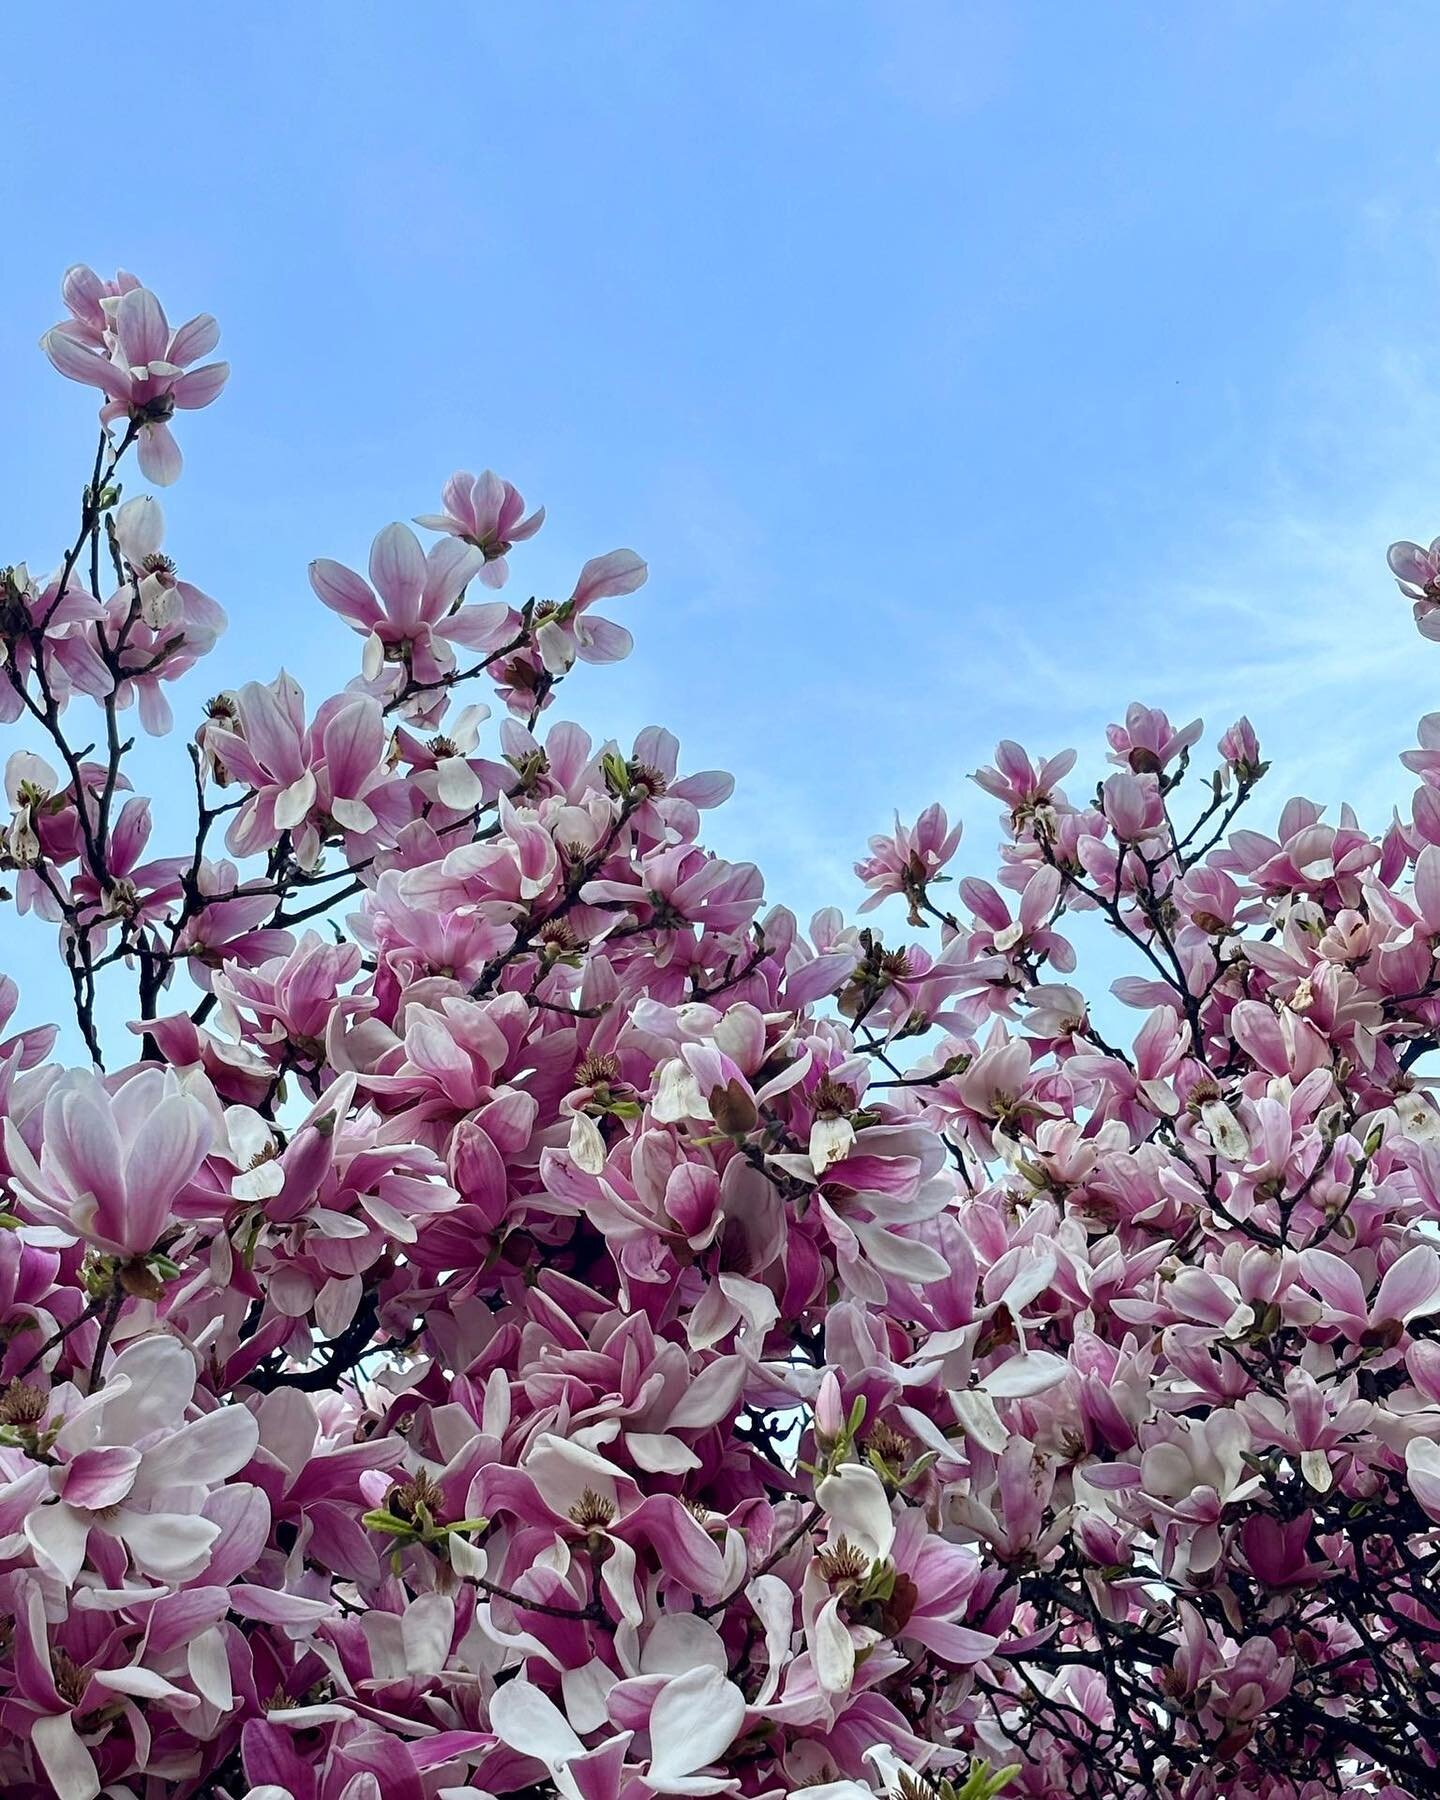 Prontissimi per la primavera 🌼🌸🌹 #qbaby #milano #asilonido #spring #flowers #love #happiness